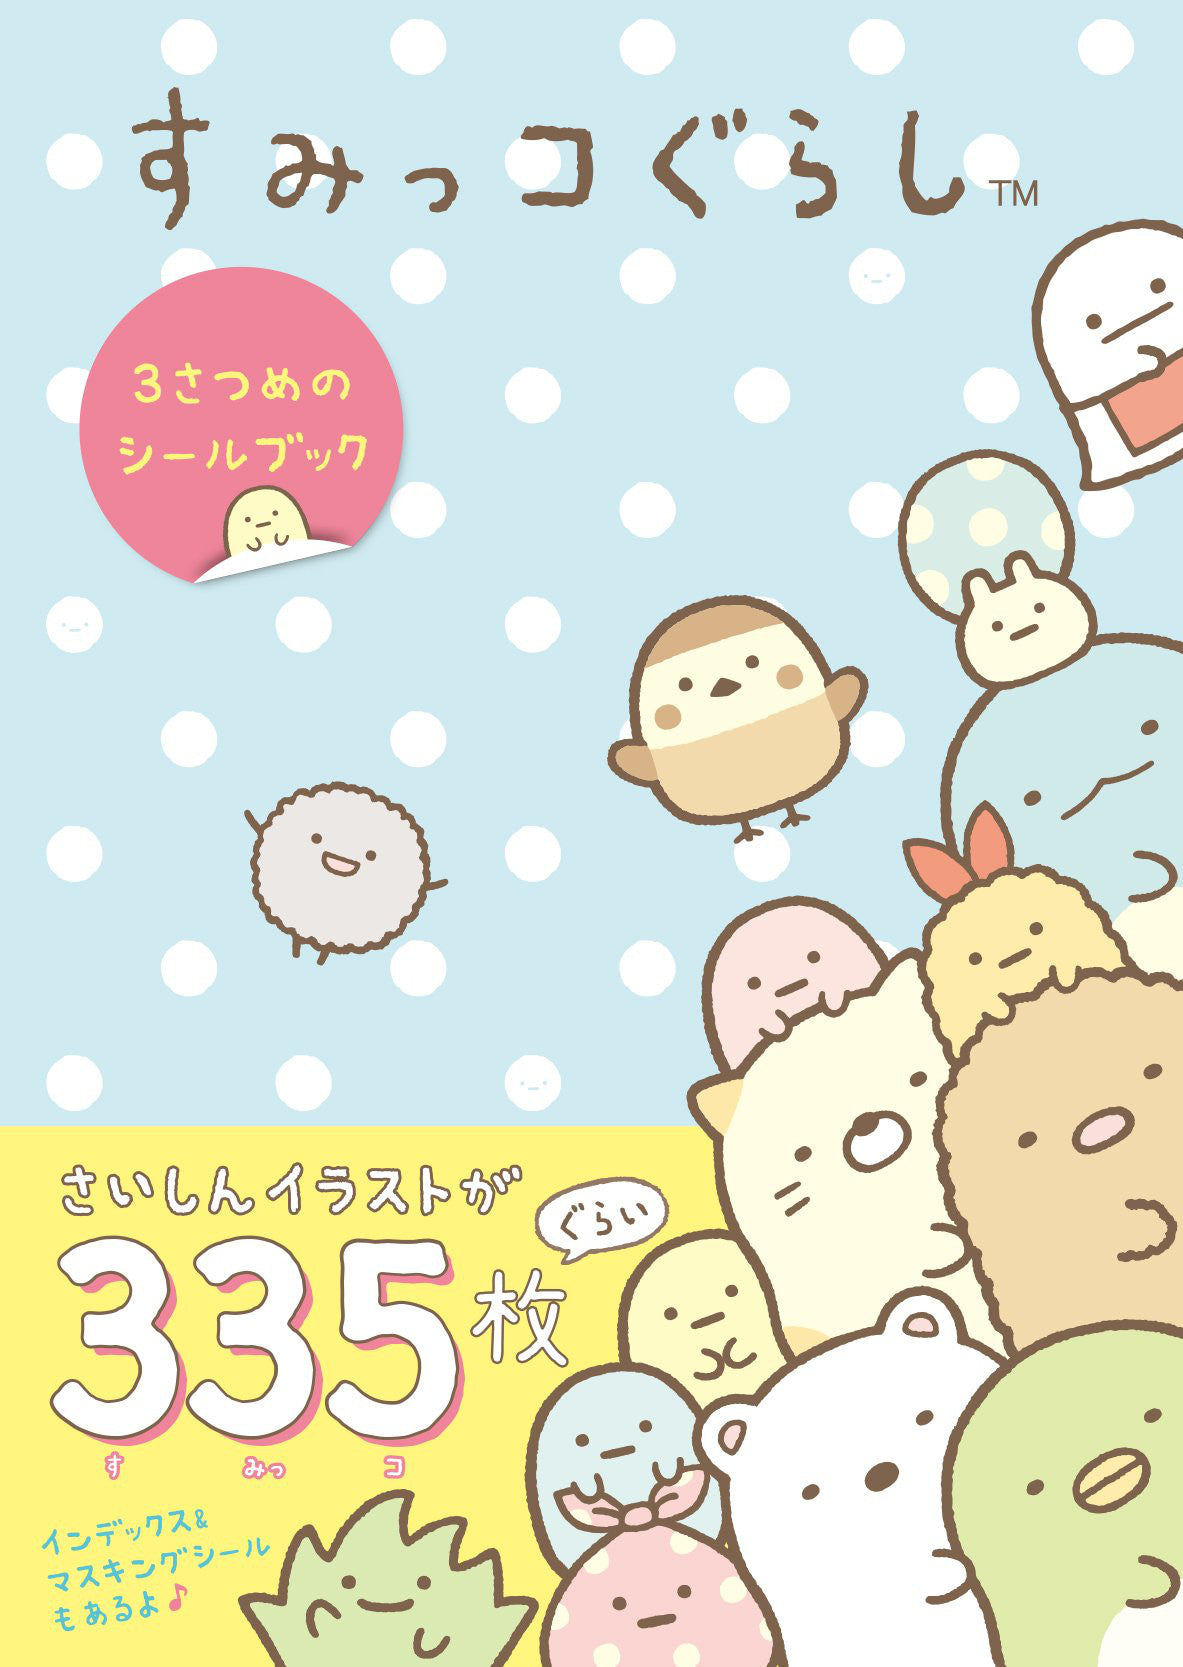 Sumikko Gurashi Sticker Storybook 3rd 335pcs San-X Japan –